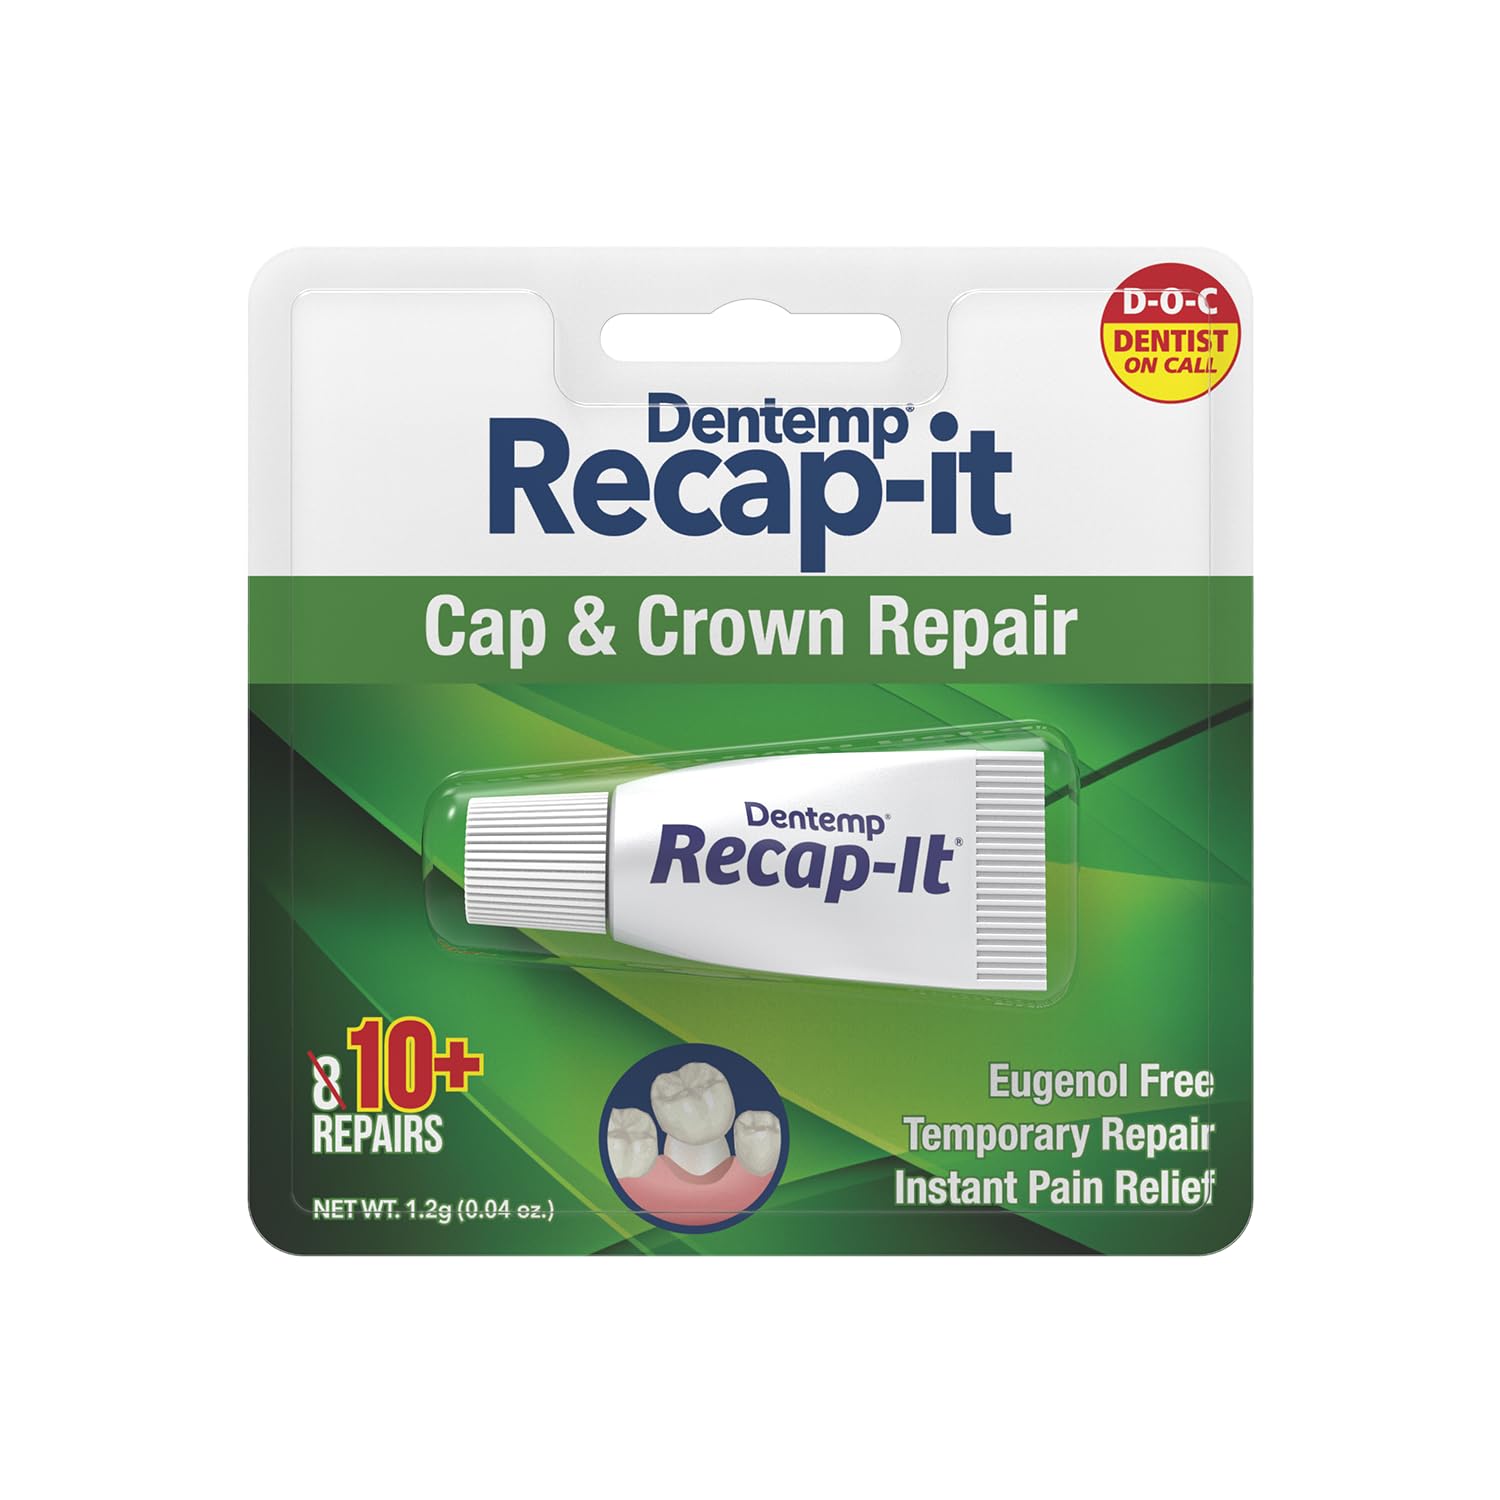 dentemp recap-it cap and crown repair